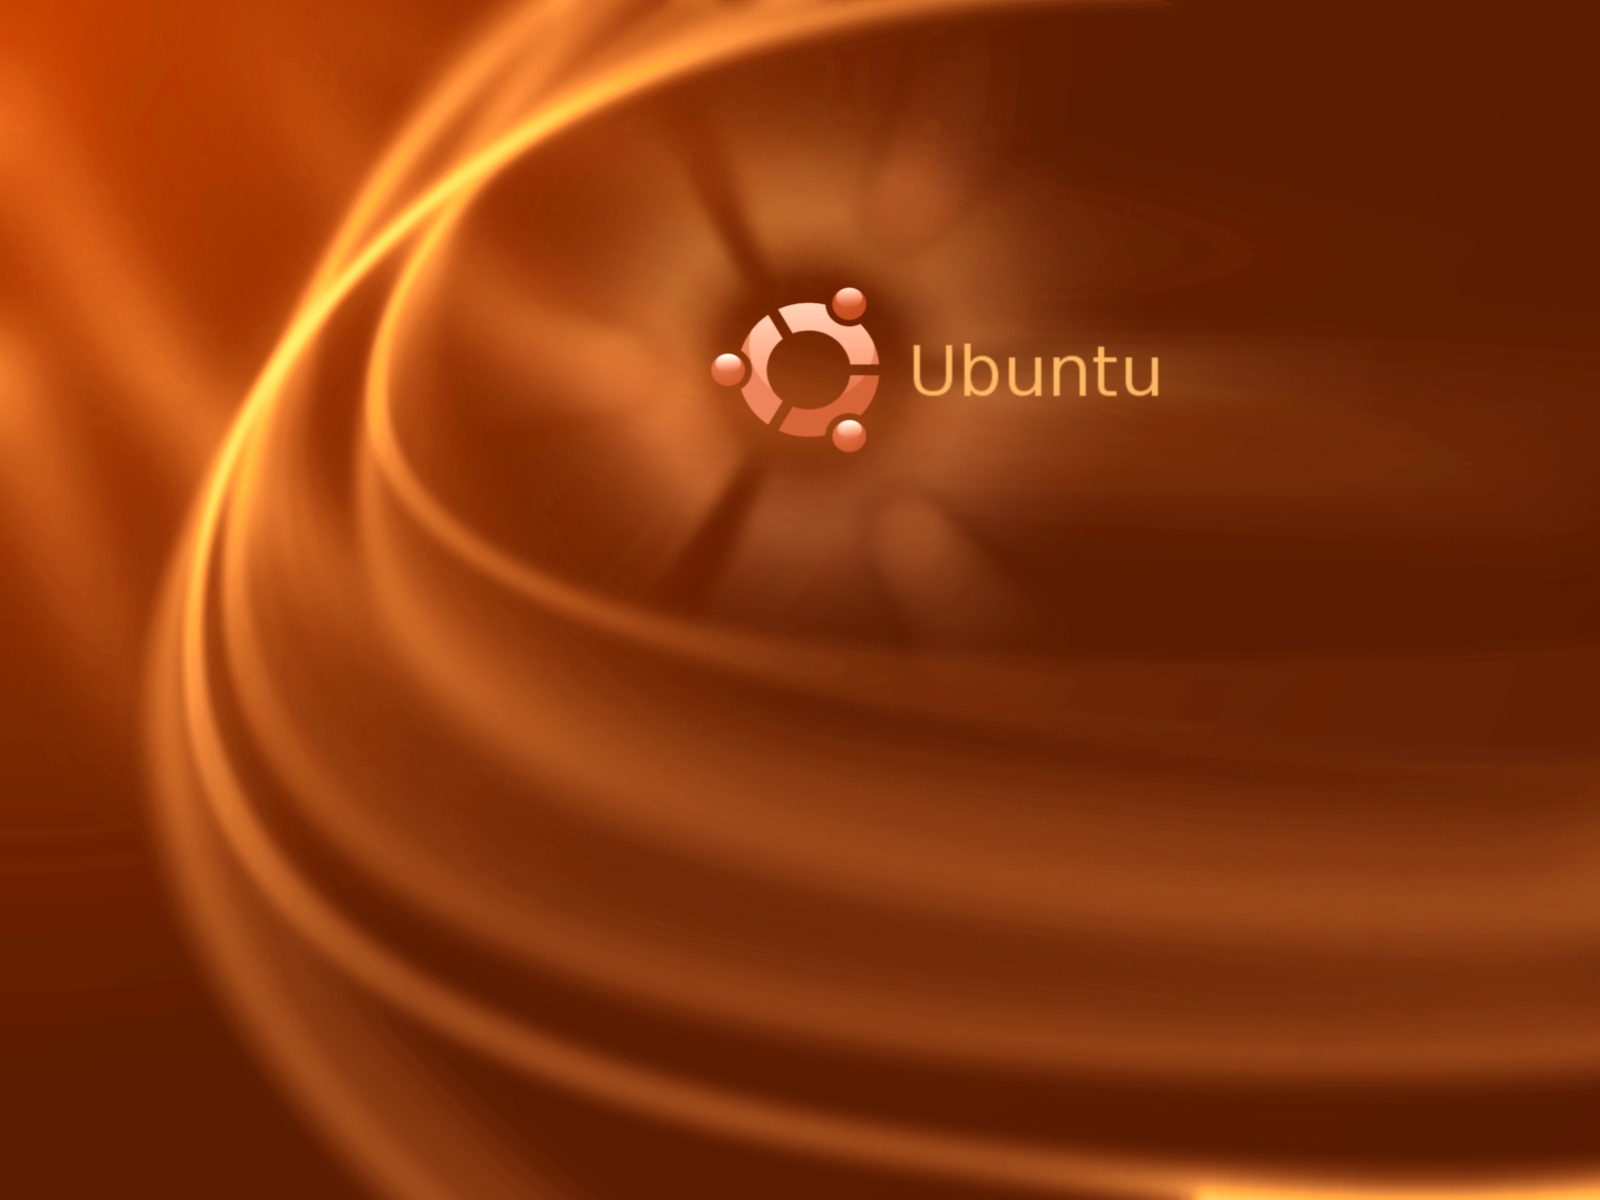  search decorate your desktop with ubuntu wallpapers Beautiful Ubuntu